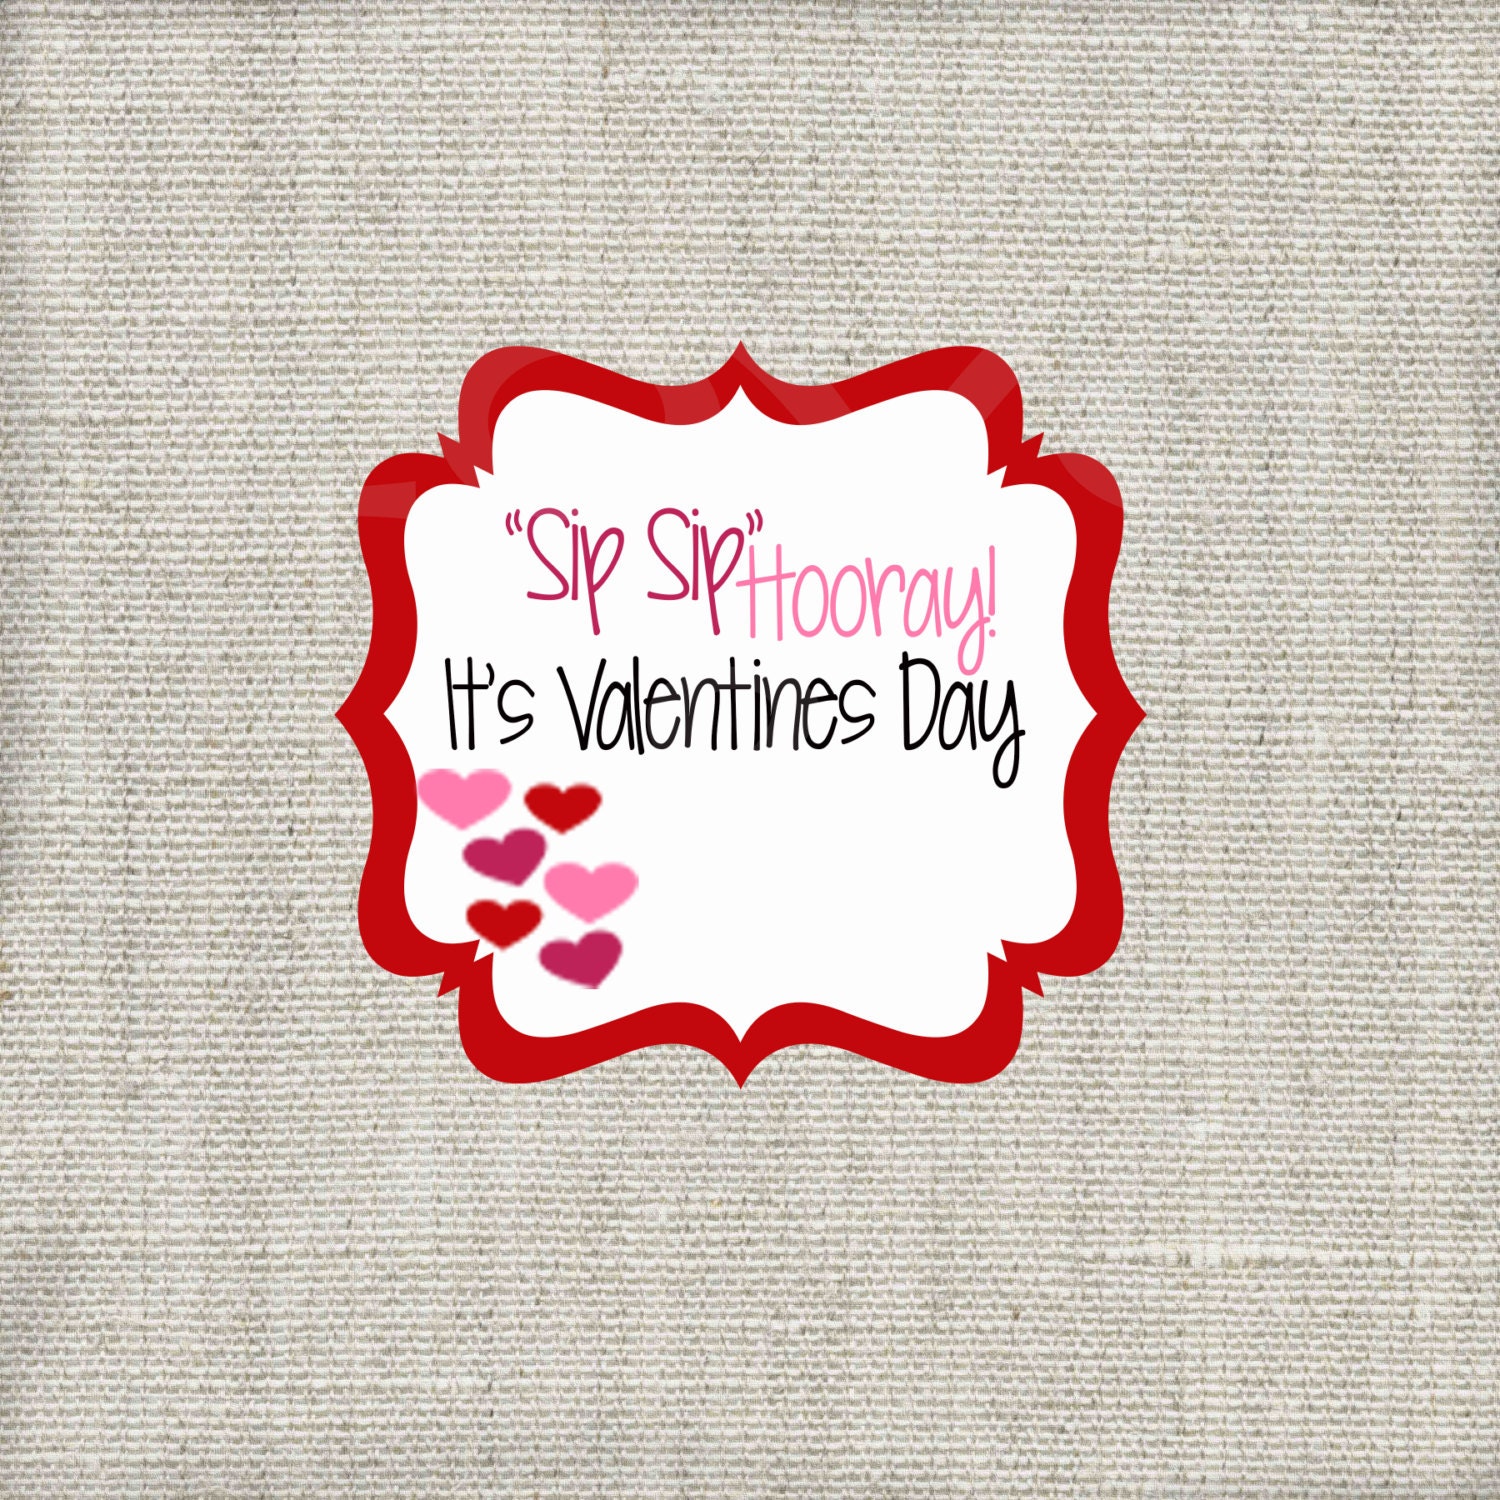 sip-sip-hooray-silly-straw-valentine-printable-by-loveandprint